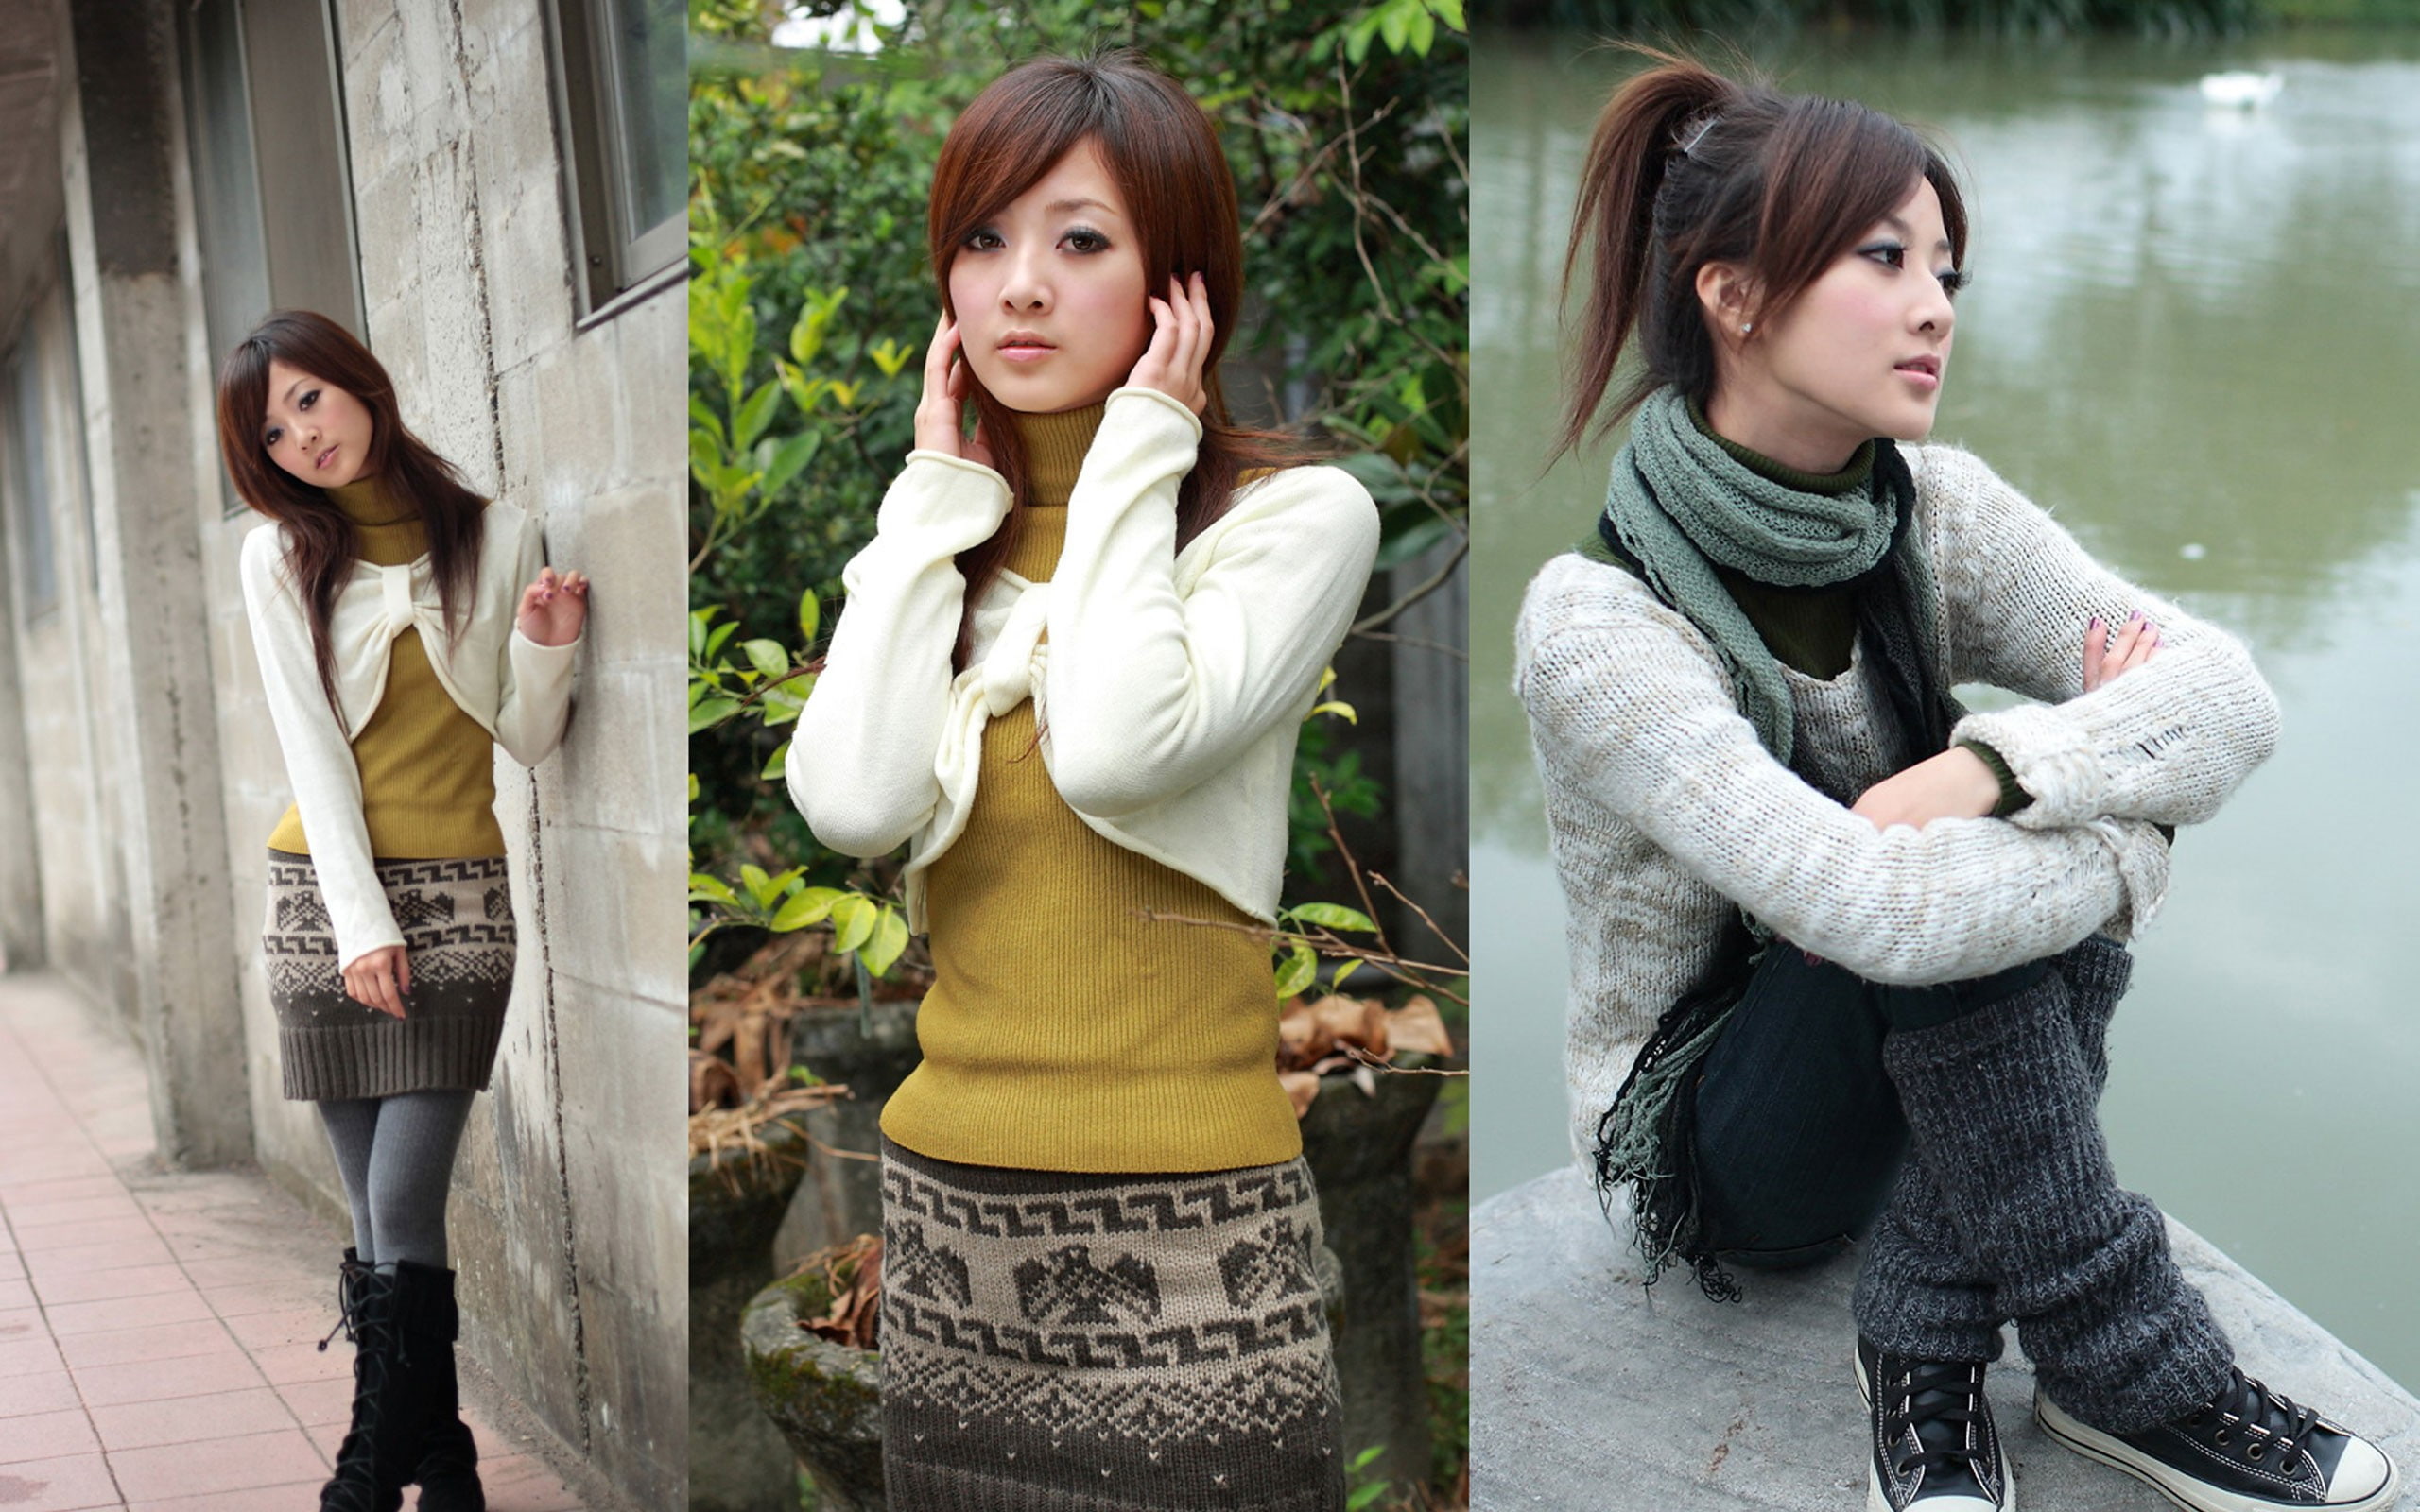 Asian, Mikako, model, Mikako Zhang Kaijie, legwarmers, young adult